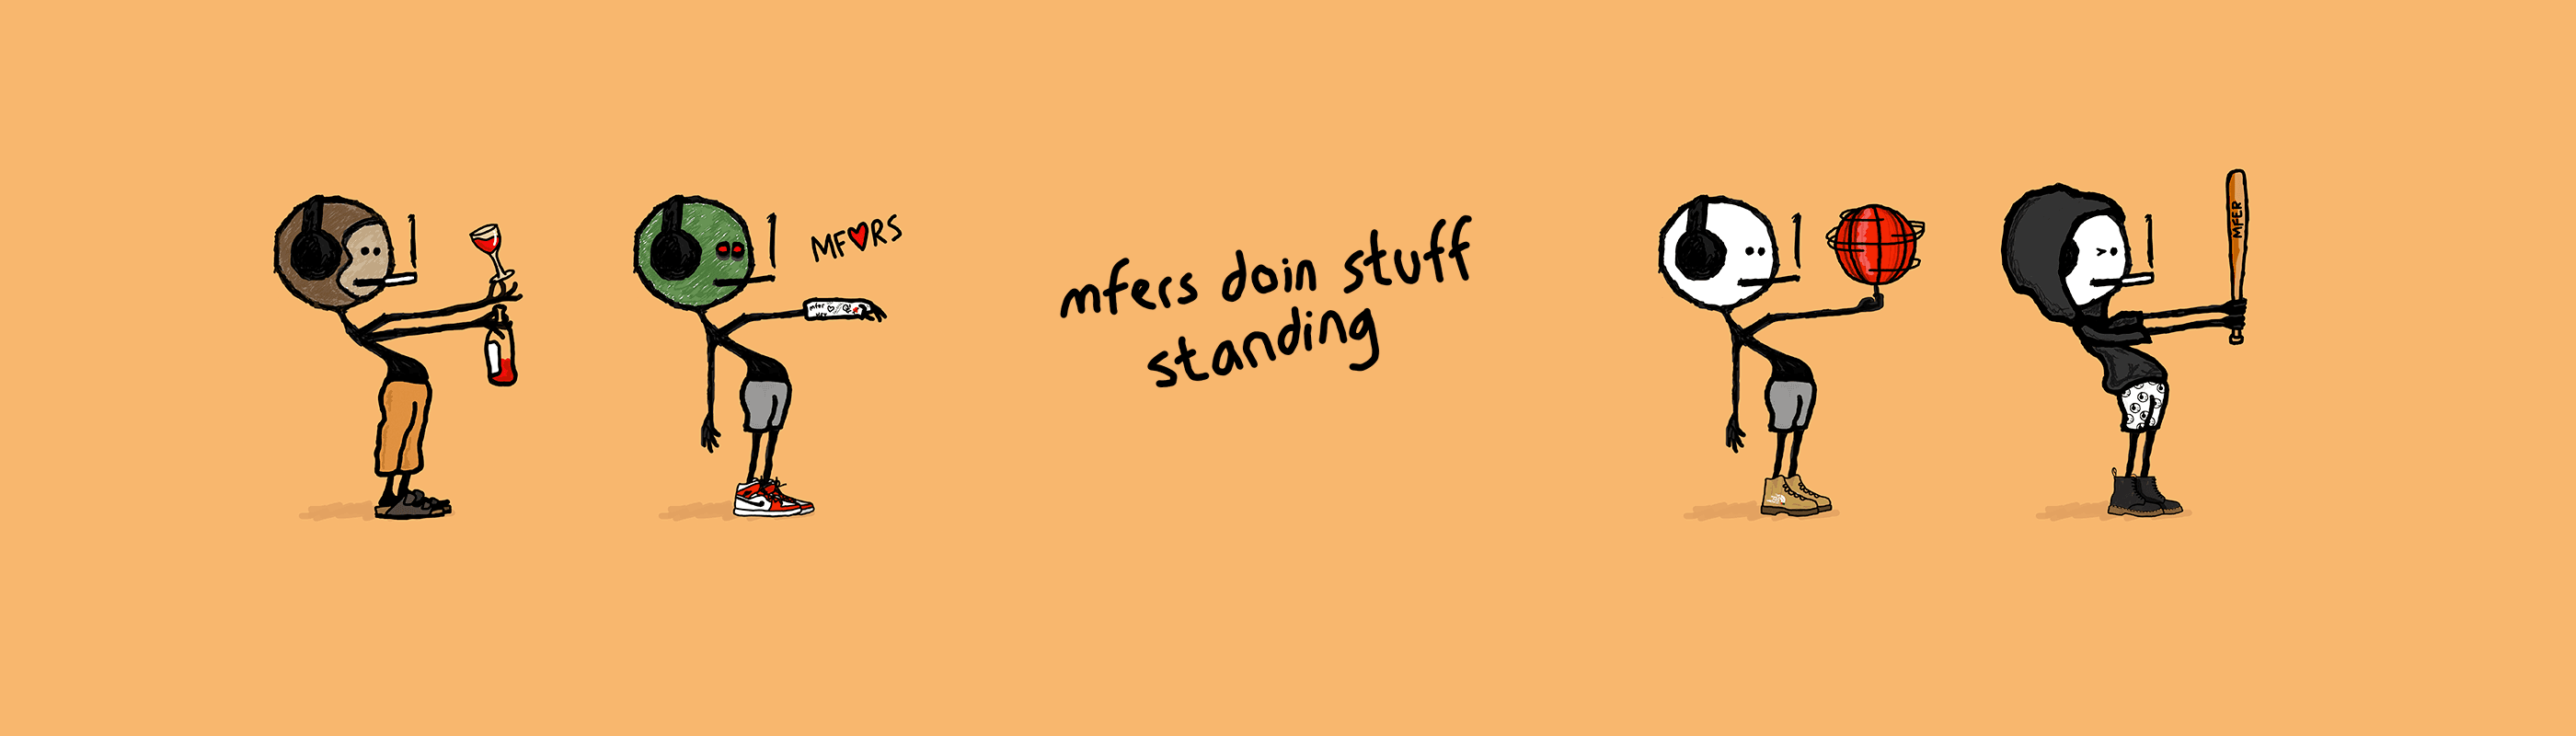 mfers doin stuff - standing